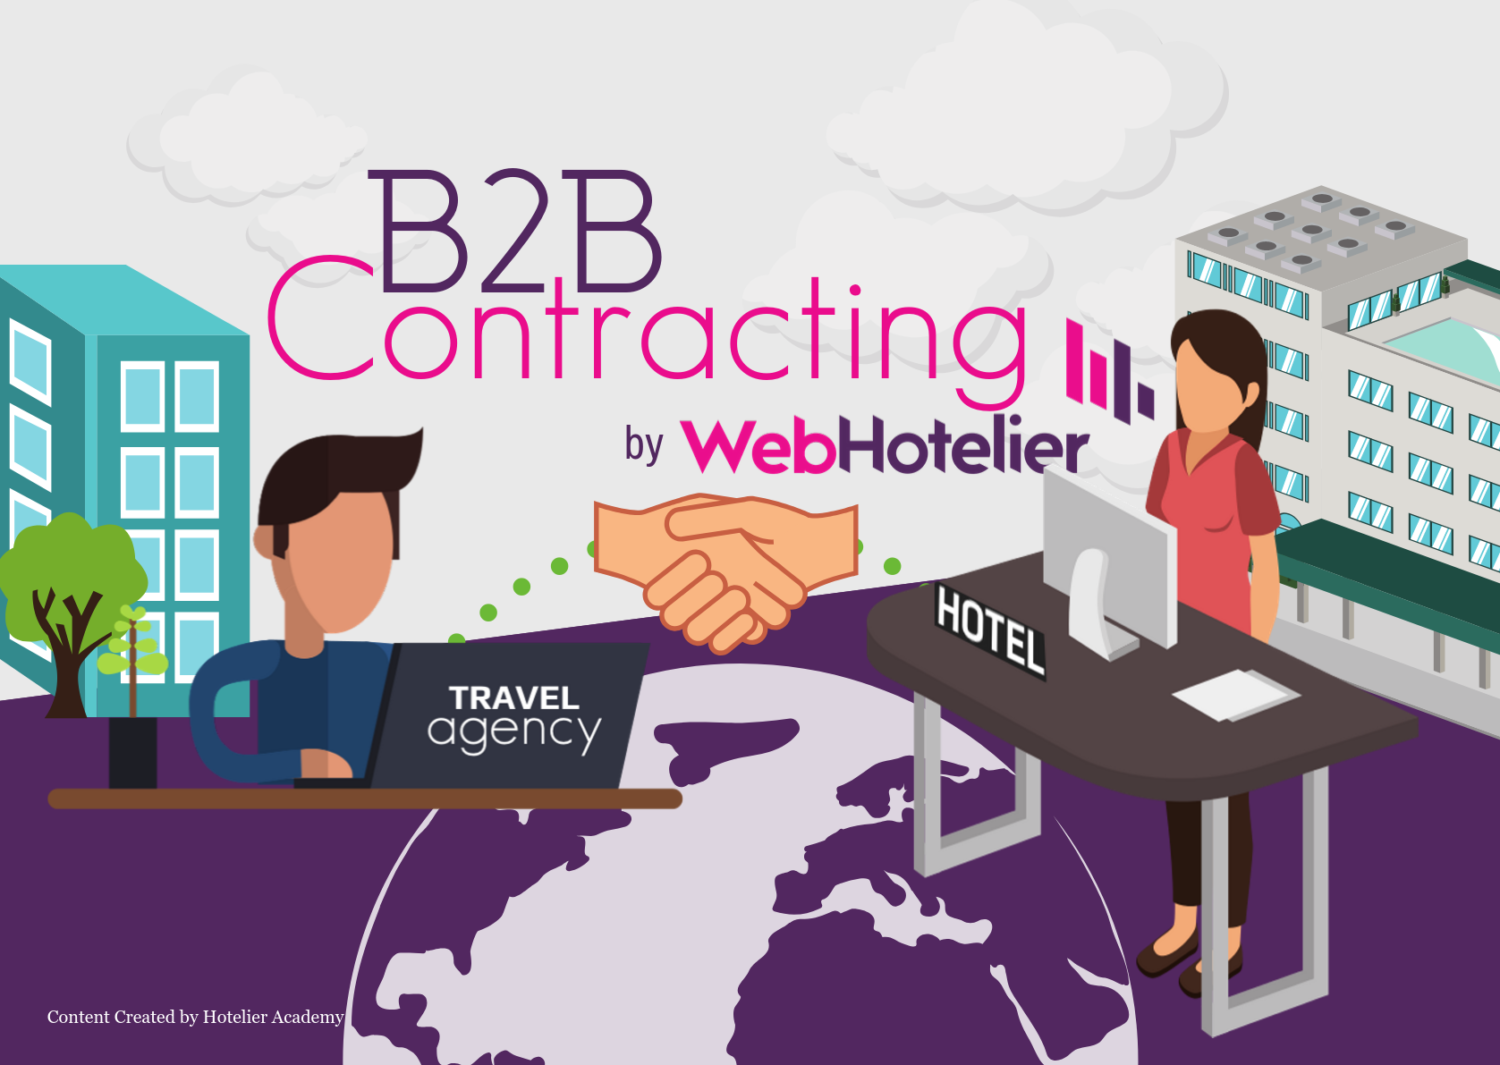 B2B Contracting - Hotelier Academy